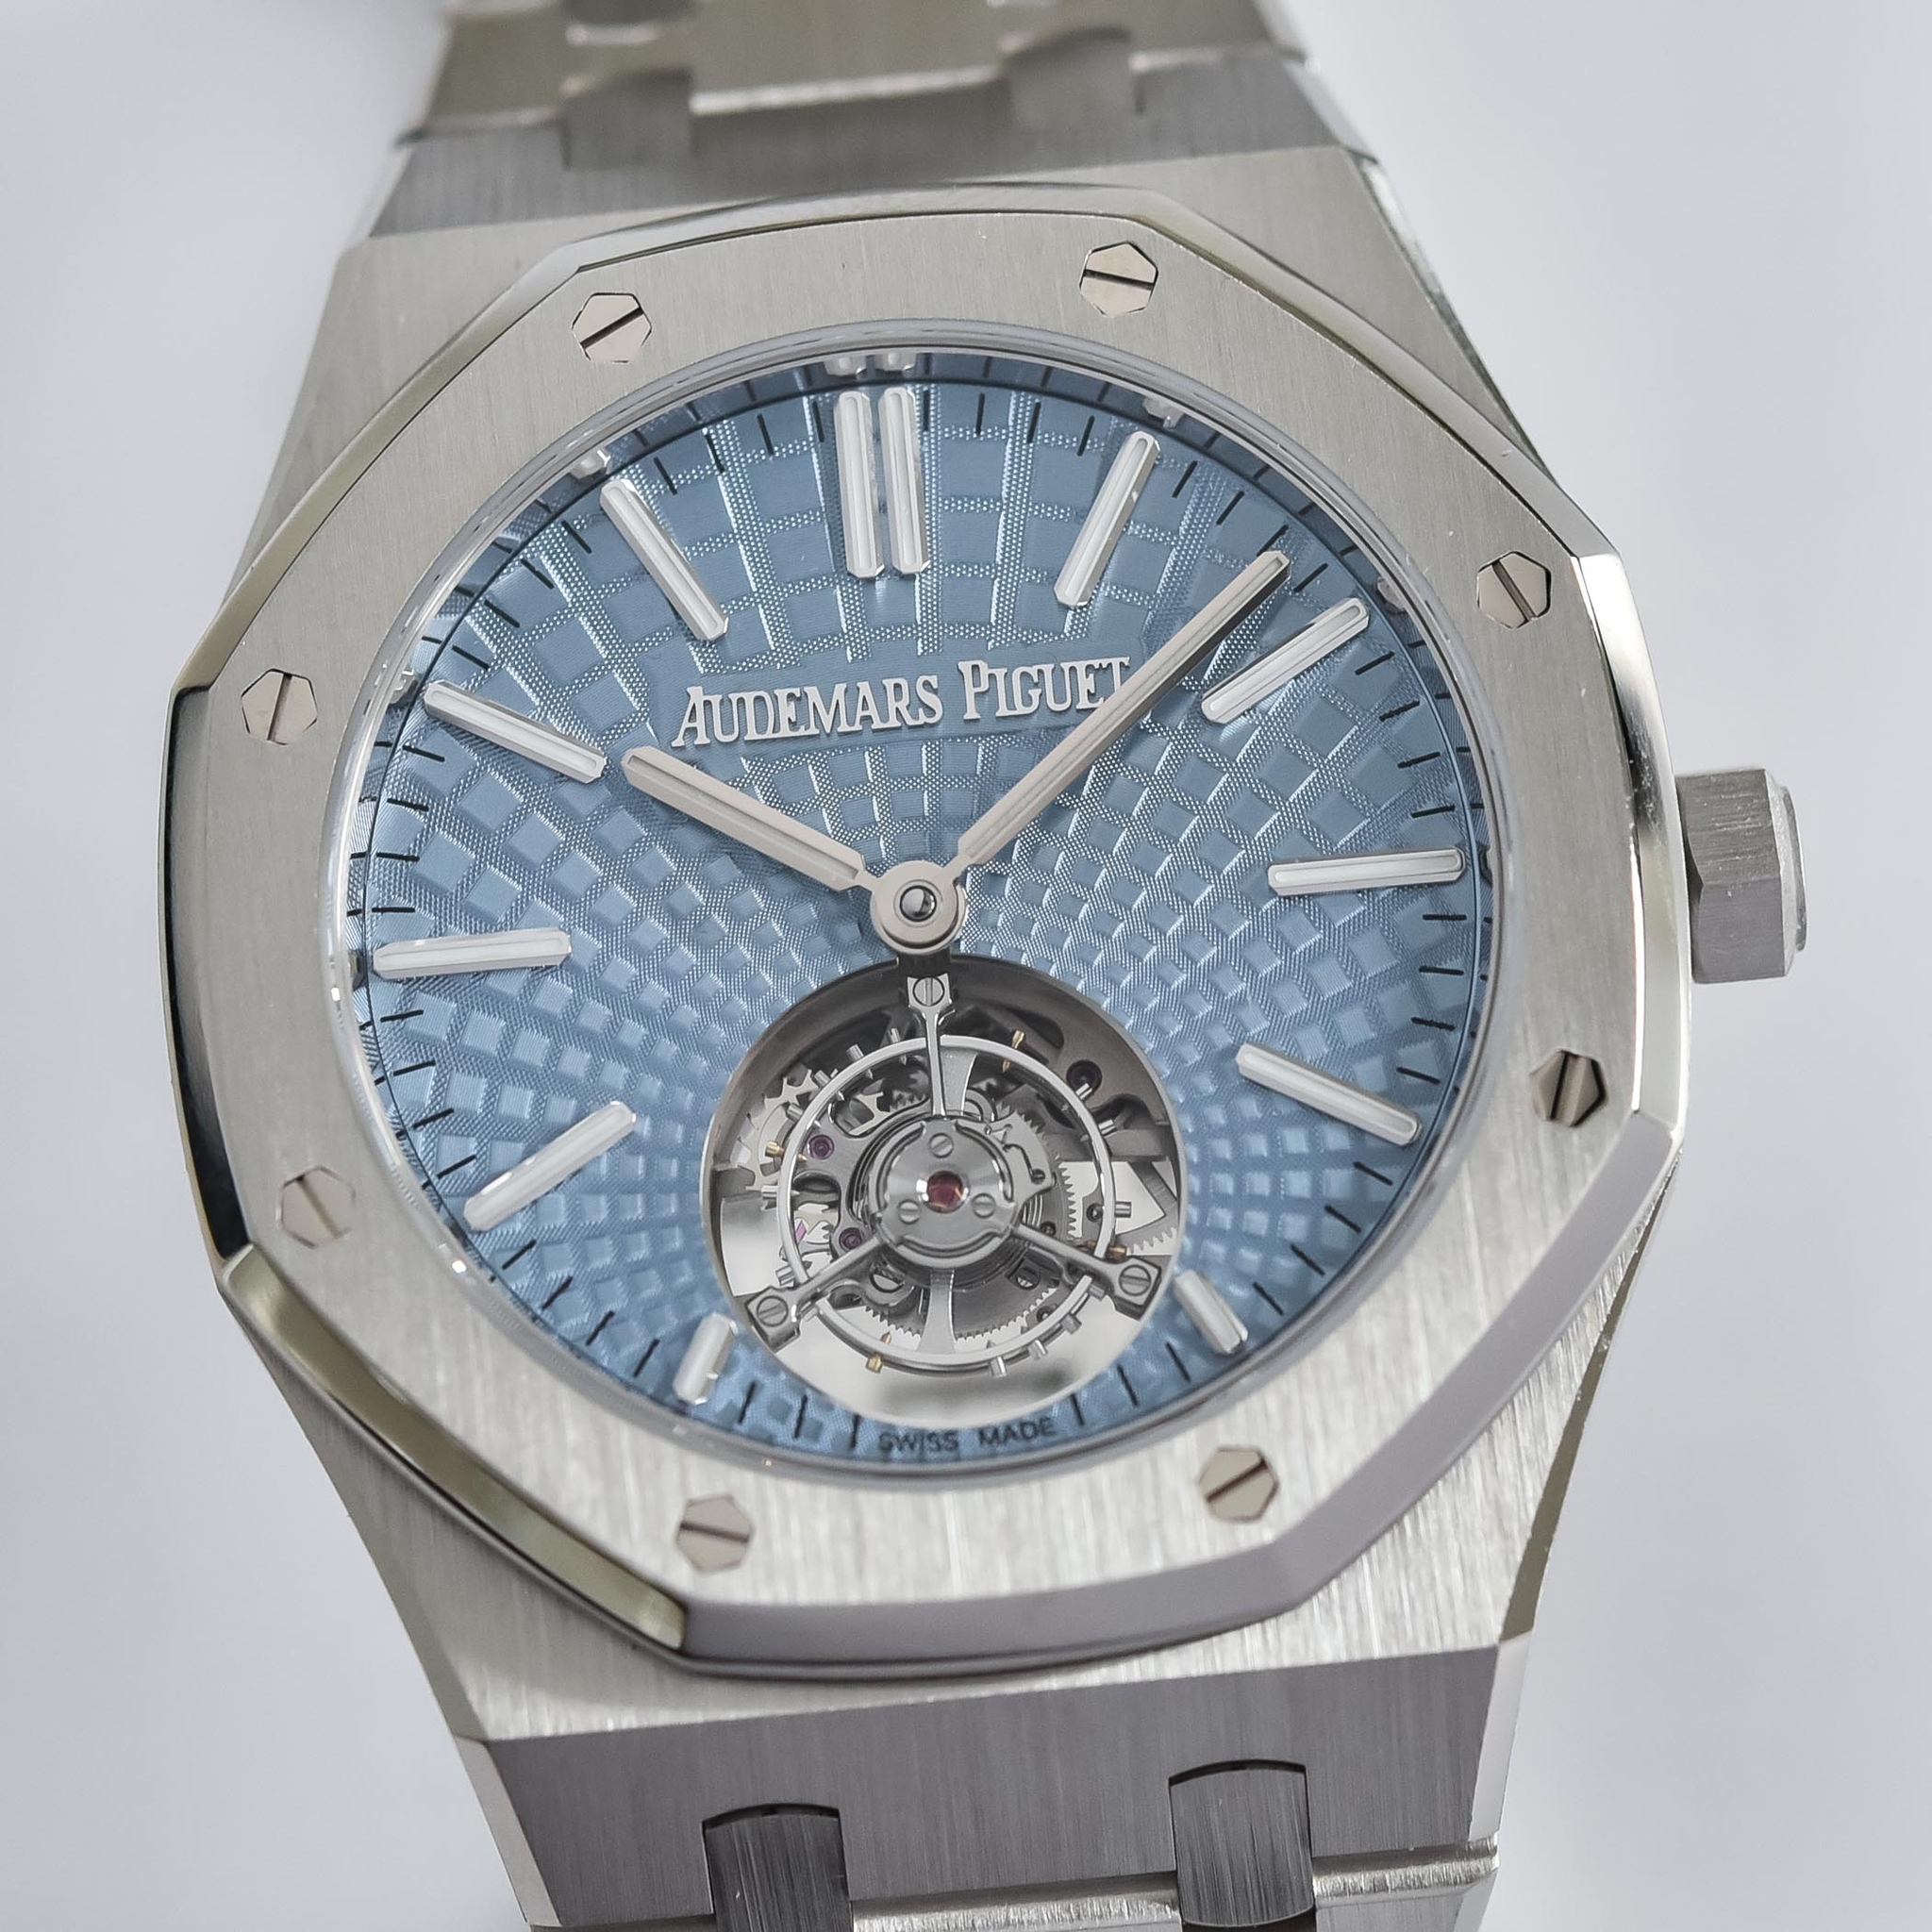 đồng hồ Audemars Piguet Royal Oak Selfwinding Flying Tourbillon Platinum mặt số Light Blue dial (ref. 26530PT.OO.1220PT.01)